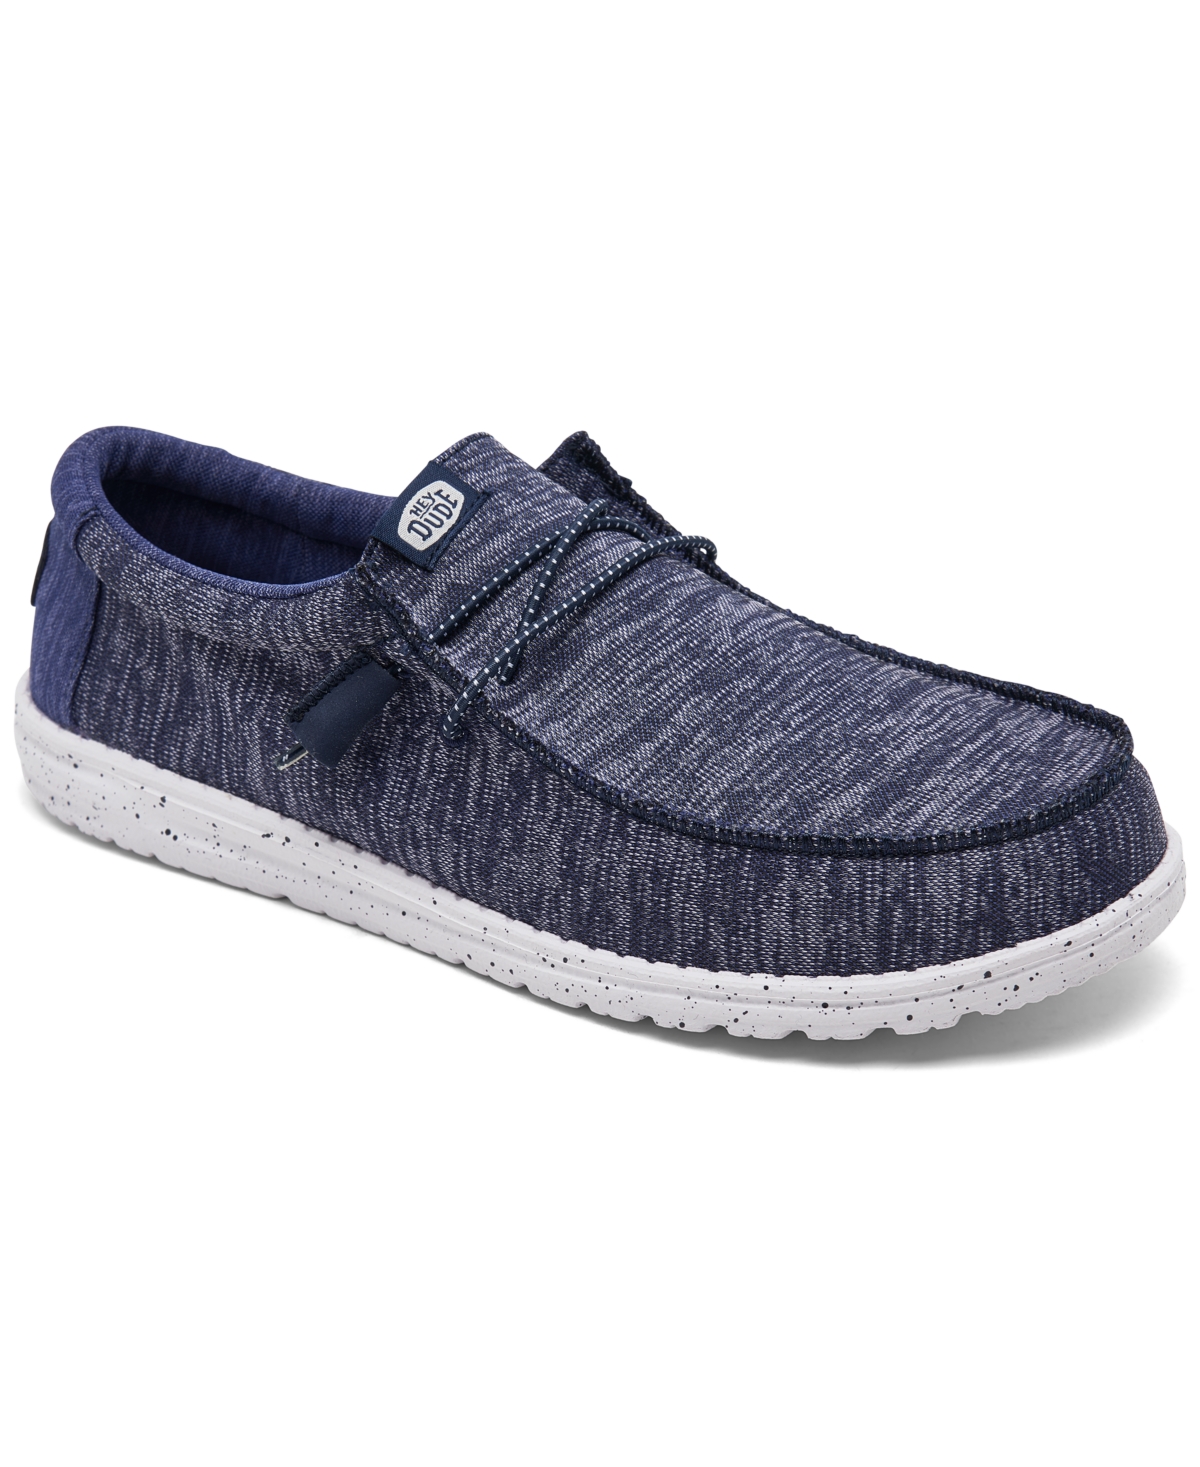 Men's Wally Sport Knit Casual Moccasin Sneakers - Blue